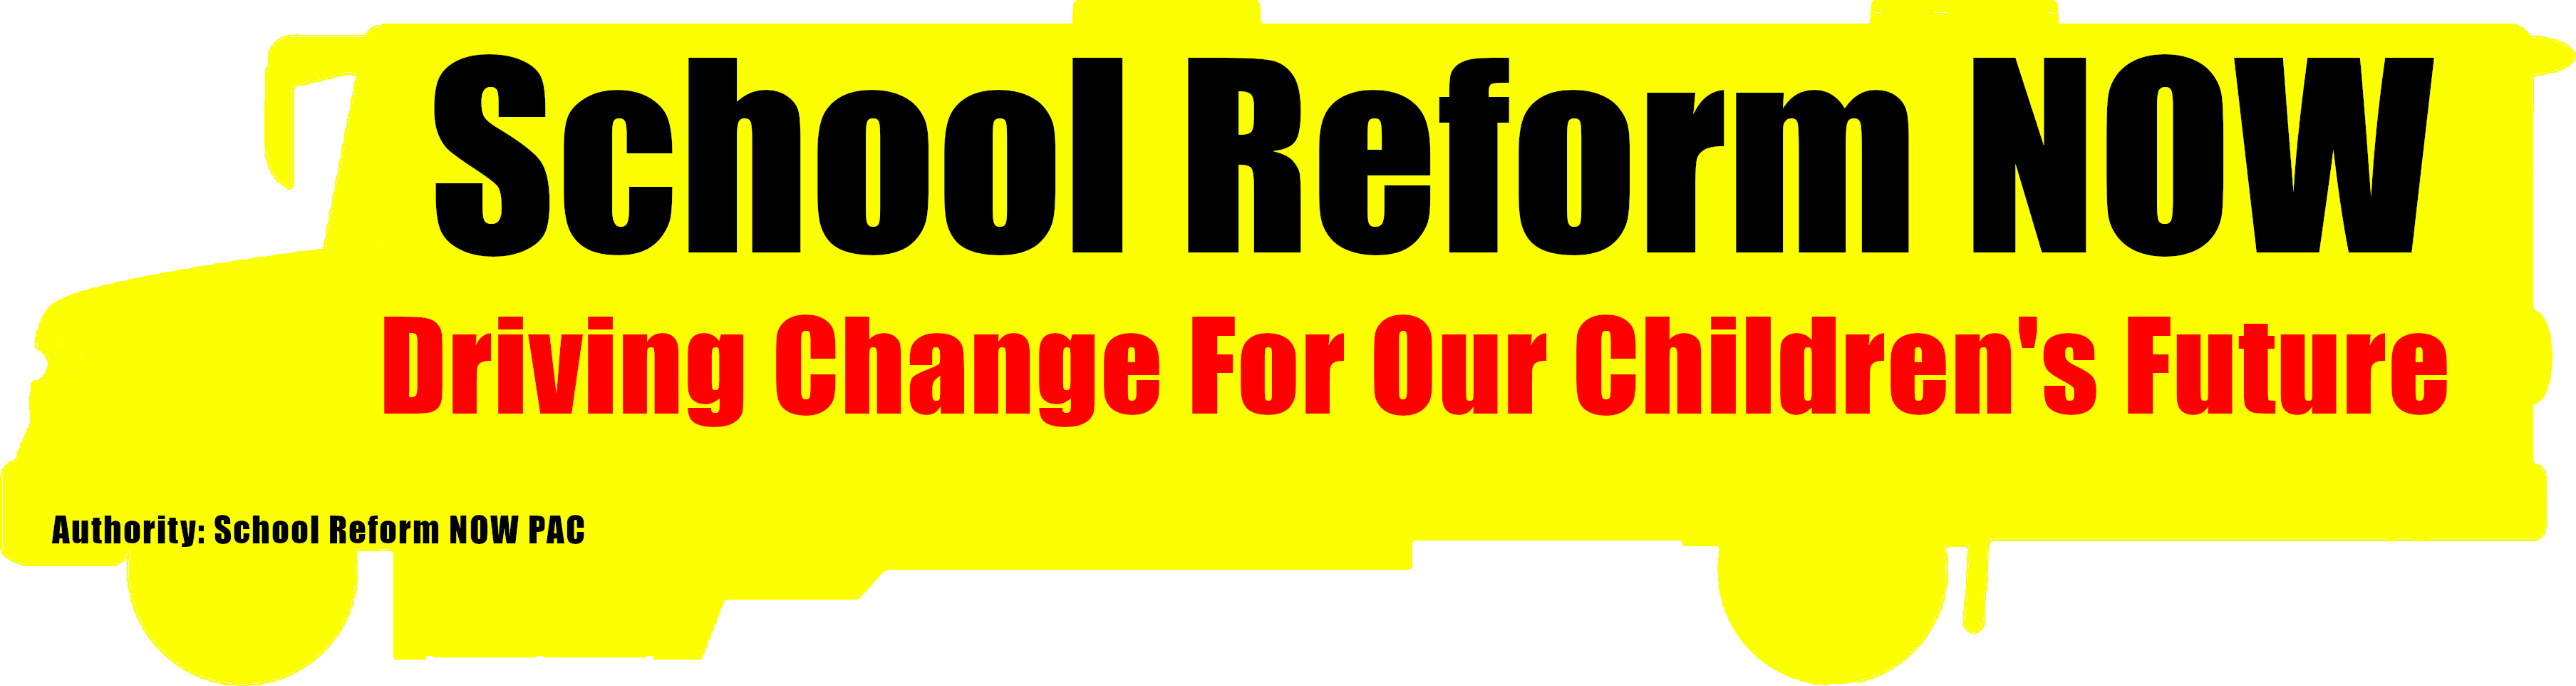 School Reform NOW PAC, LLC Logo